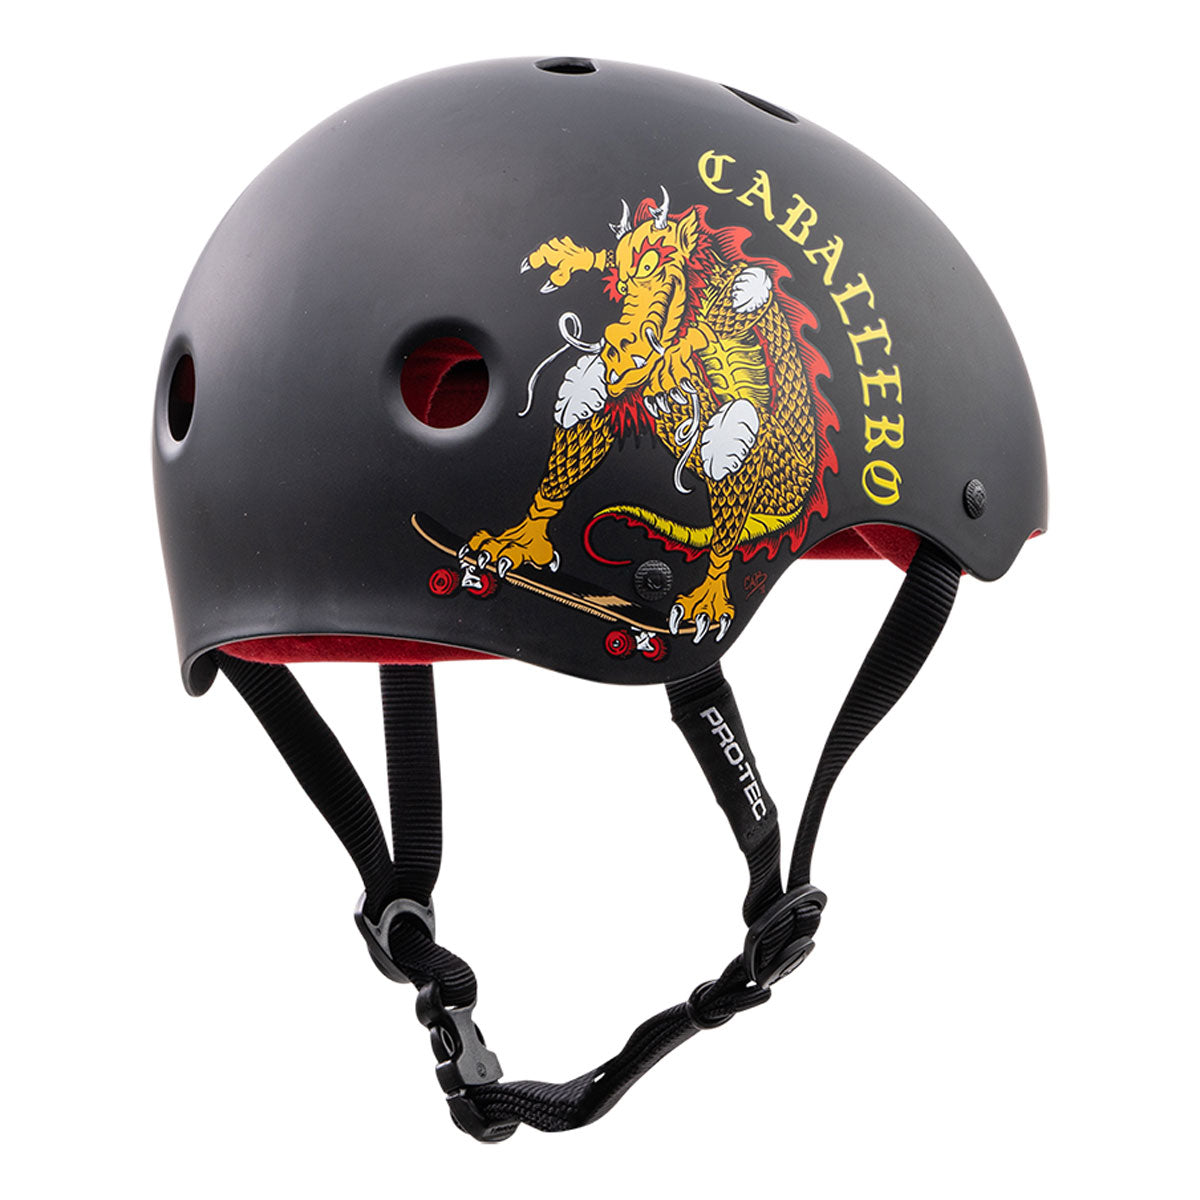 Pro Tec Classic Certified Helmet - Cab Dragon image 2